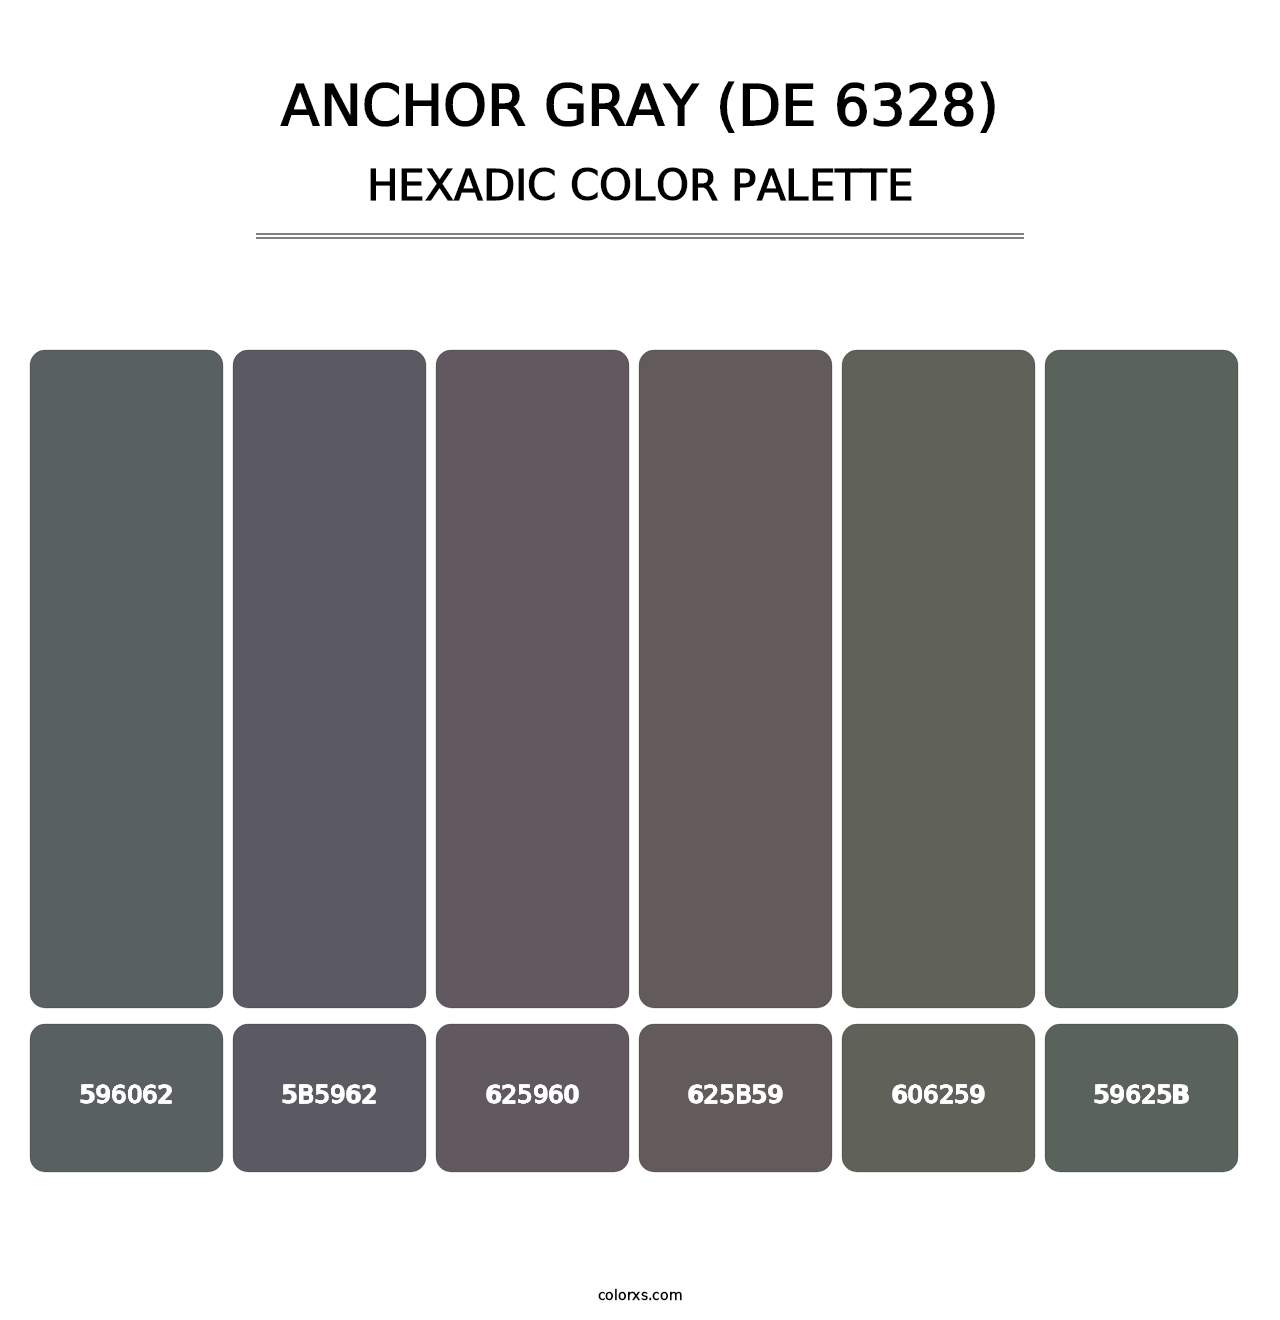 Anchor Gray (DE 6328) - Hexadic Color Palette